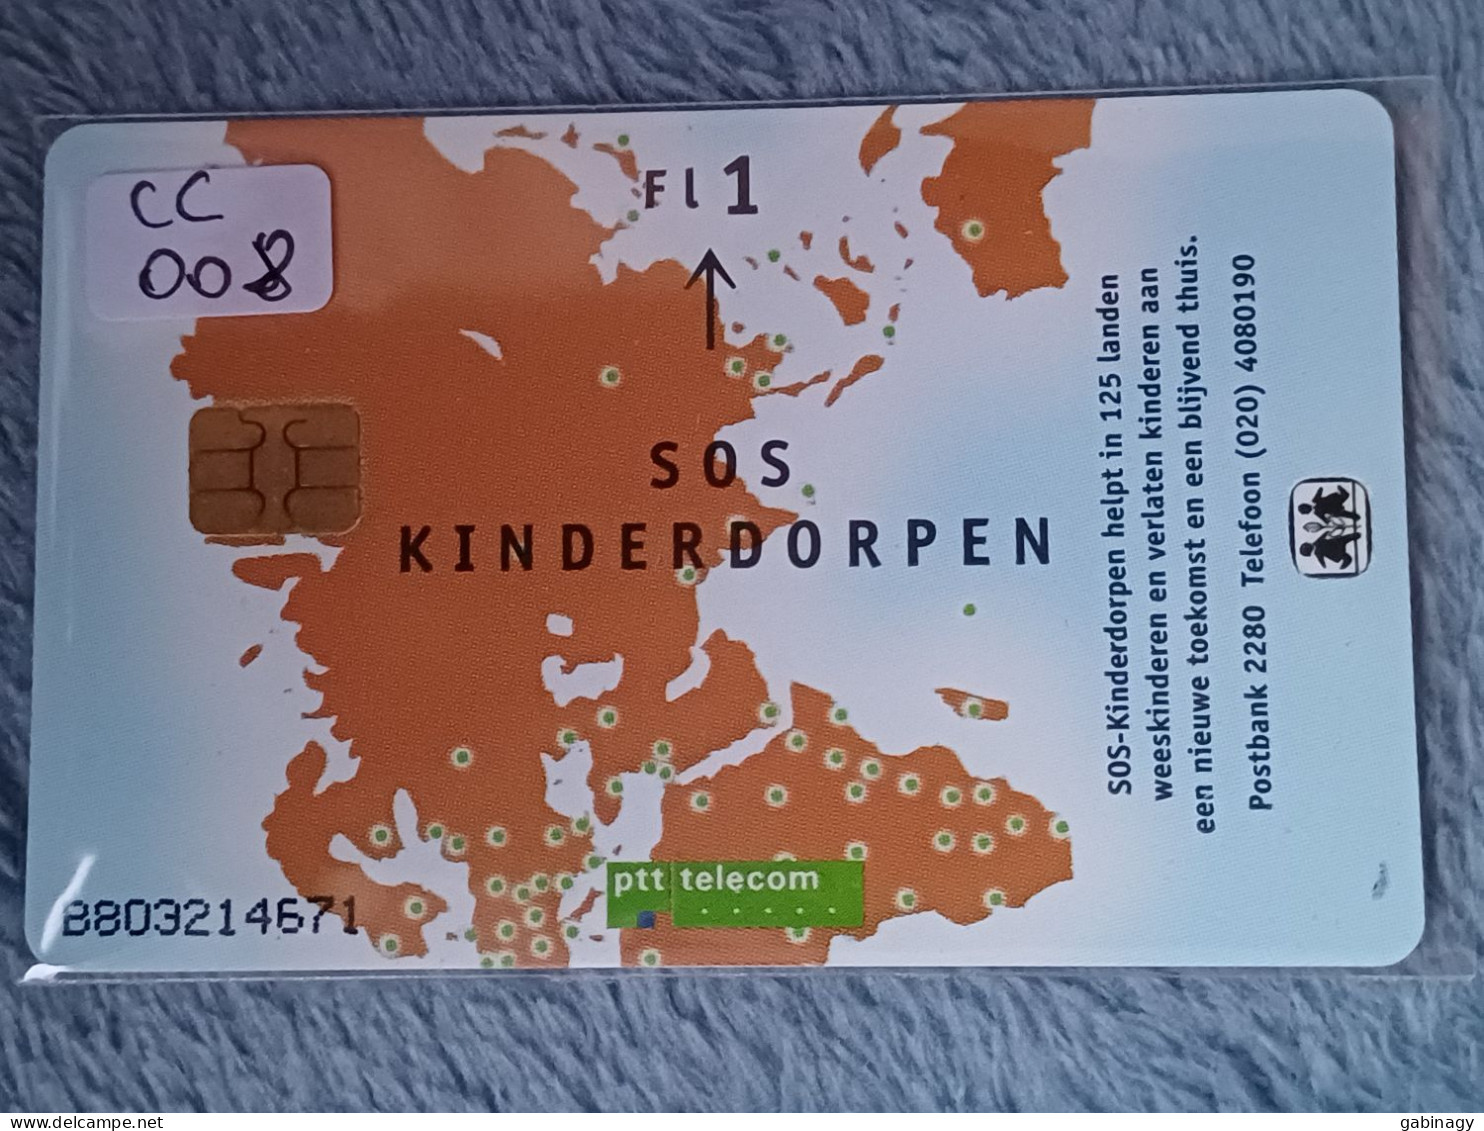 NETHERLANDS - CC008 - SOS Kinderdorpen World 1 - 13.000EX. - Private